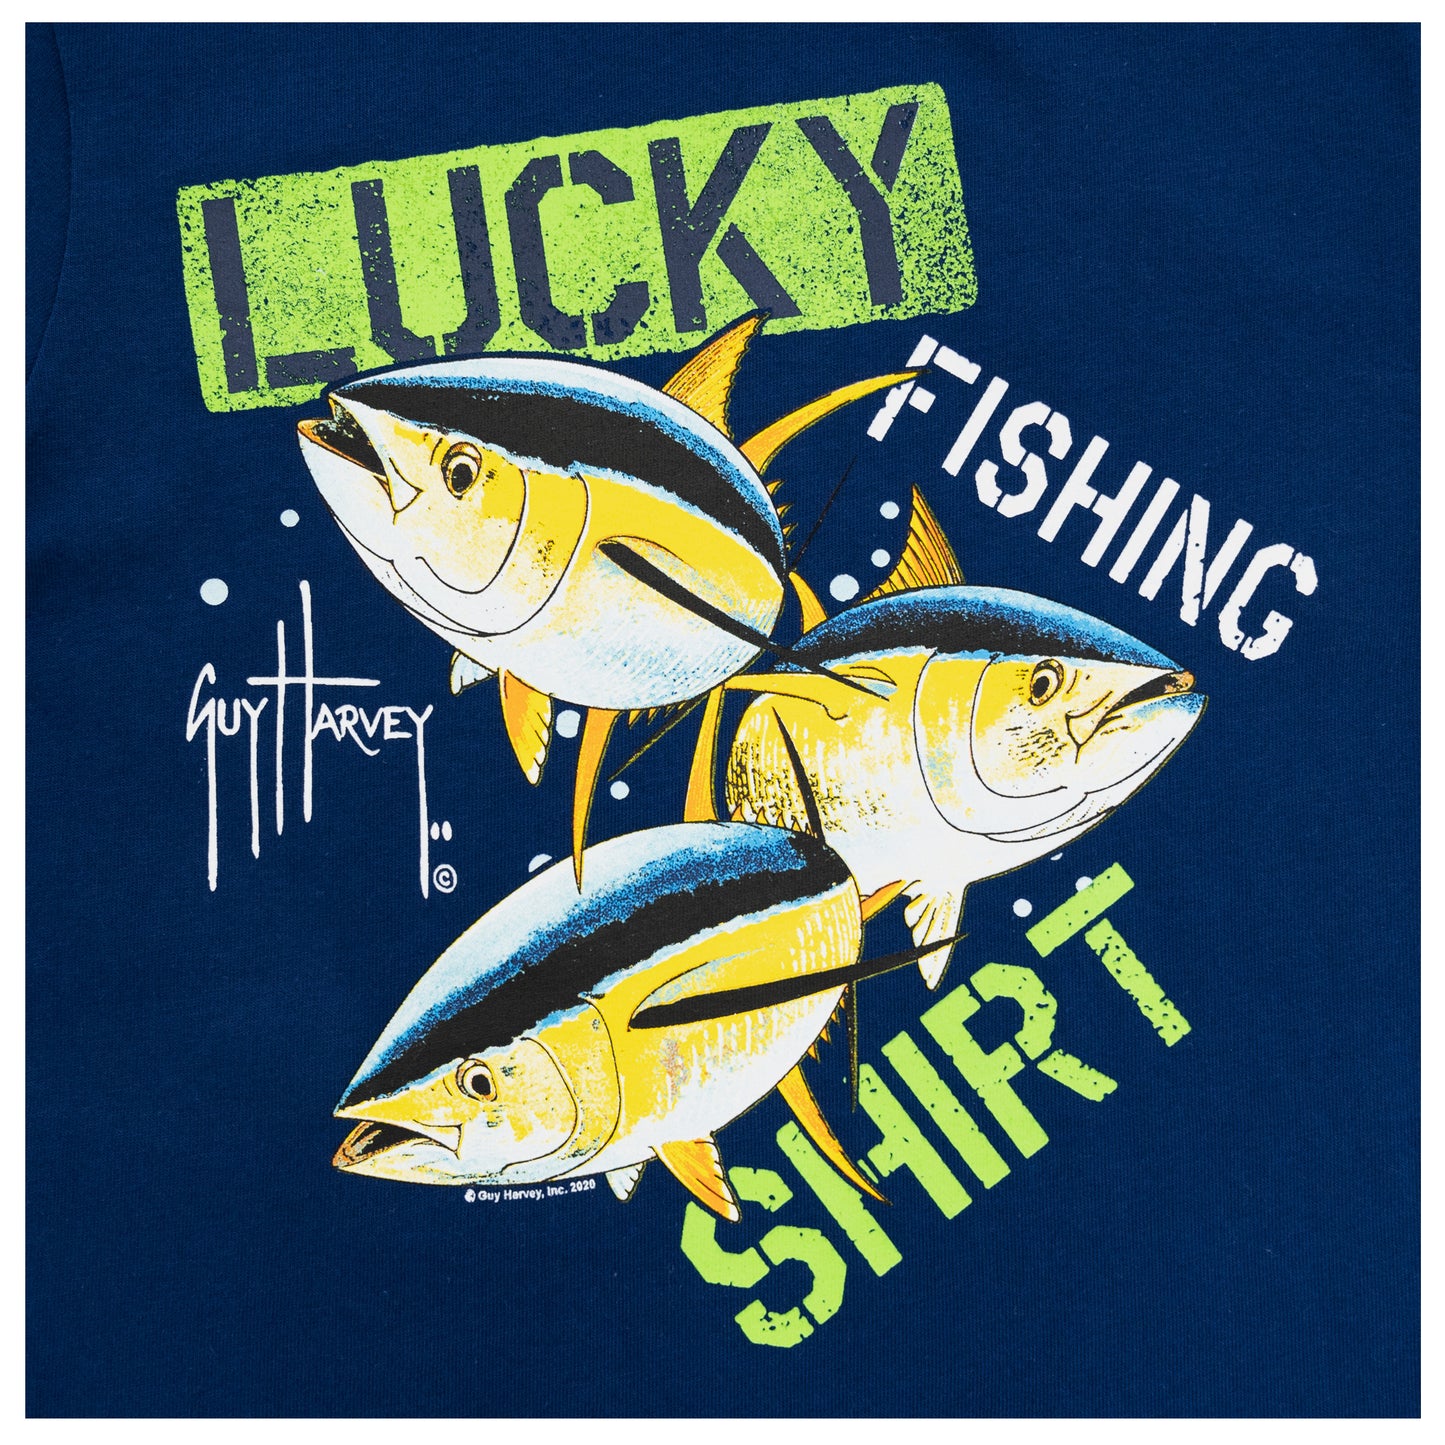 Fishing Funny Kids Boy Shirt T-shirt sold by CarolinLee